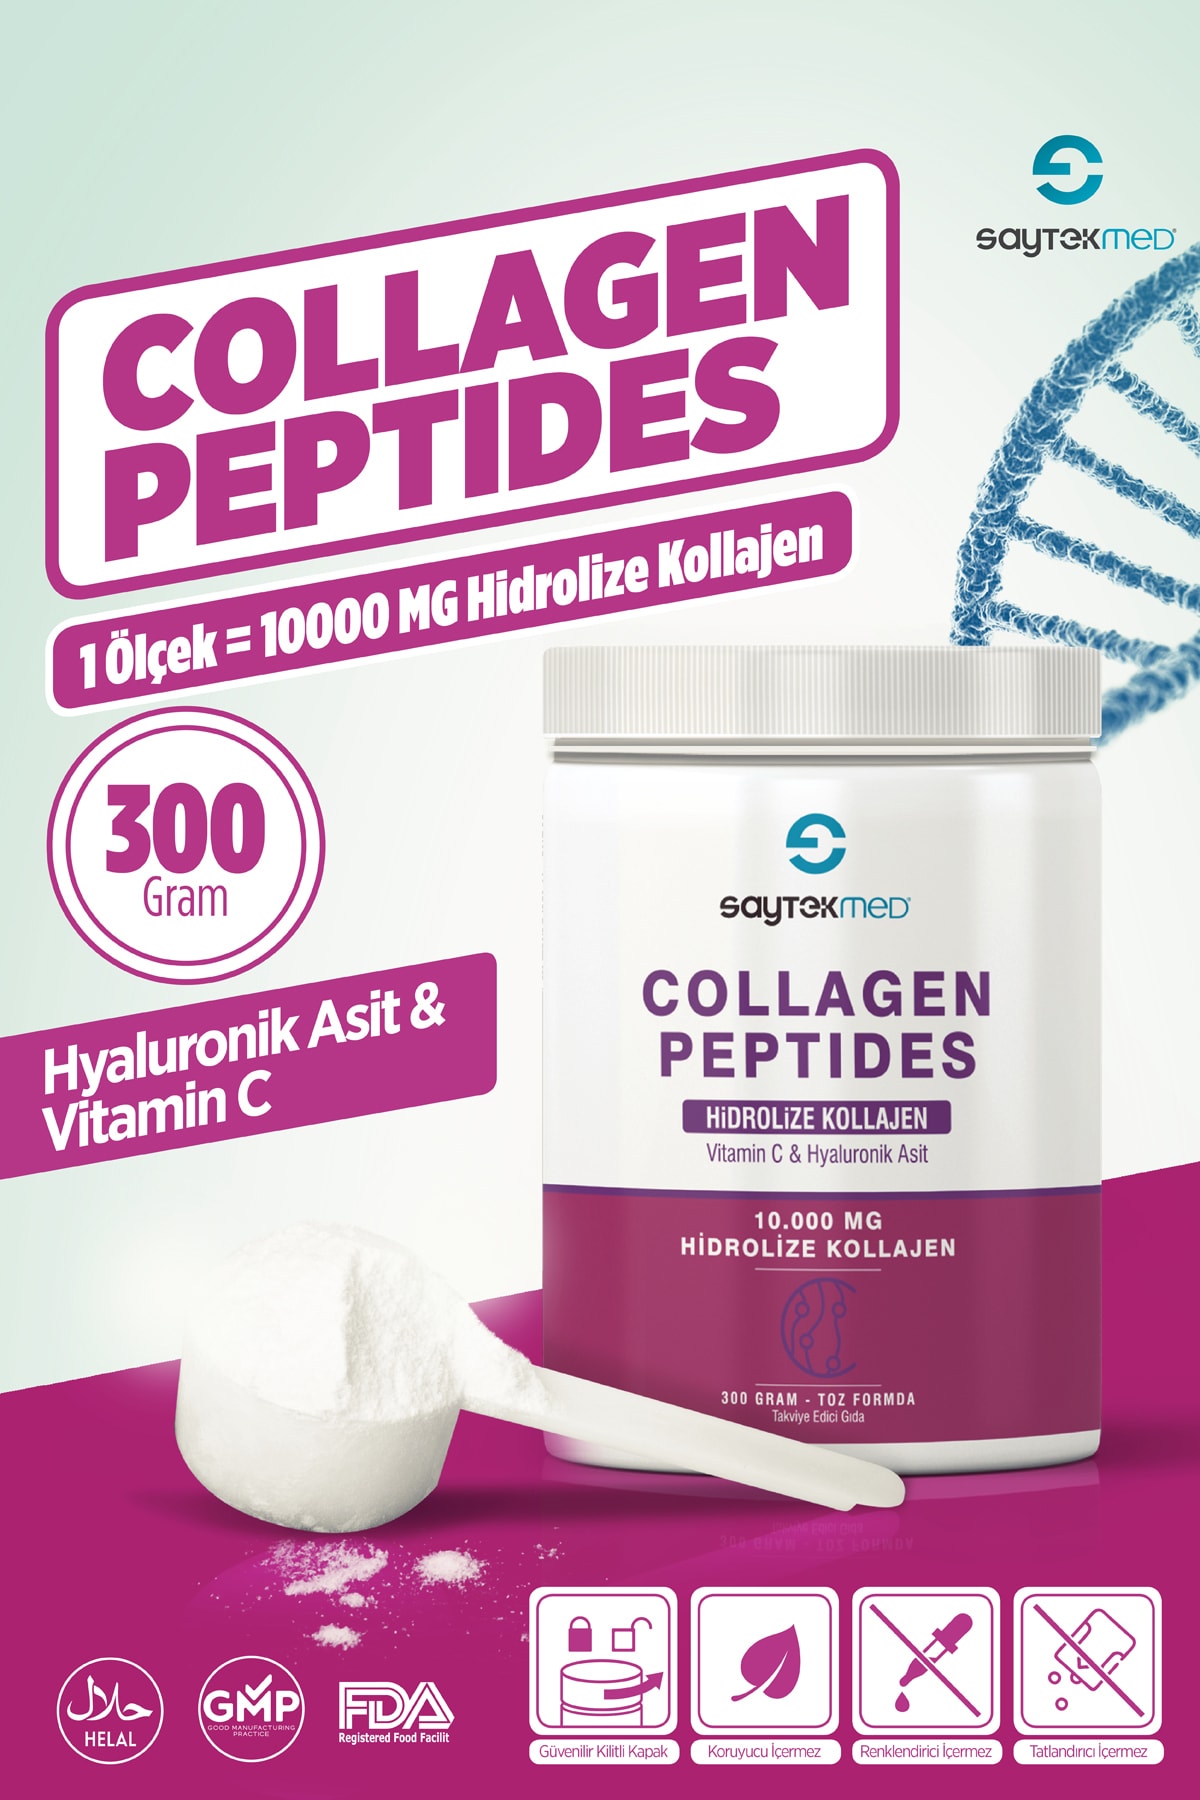 SAYTEKMED Collagen Peptides / Hidrolize Kollajen, Hyaluronik Asit Ve Vitamin C Içeren Takviye Gıda